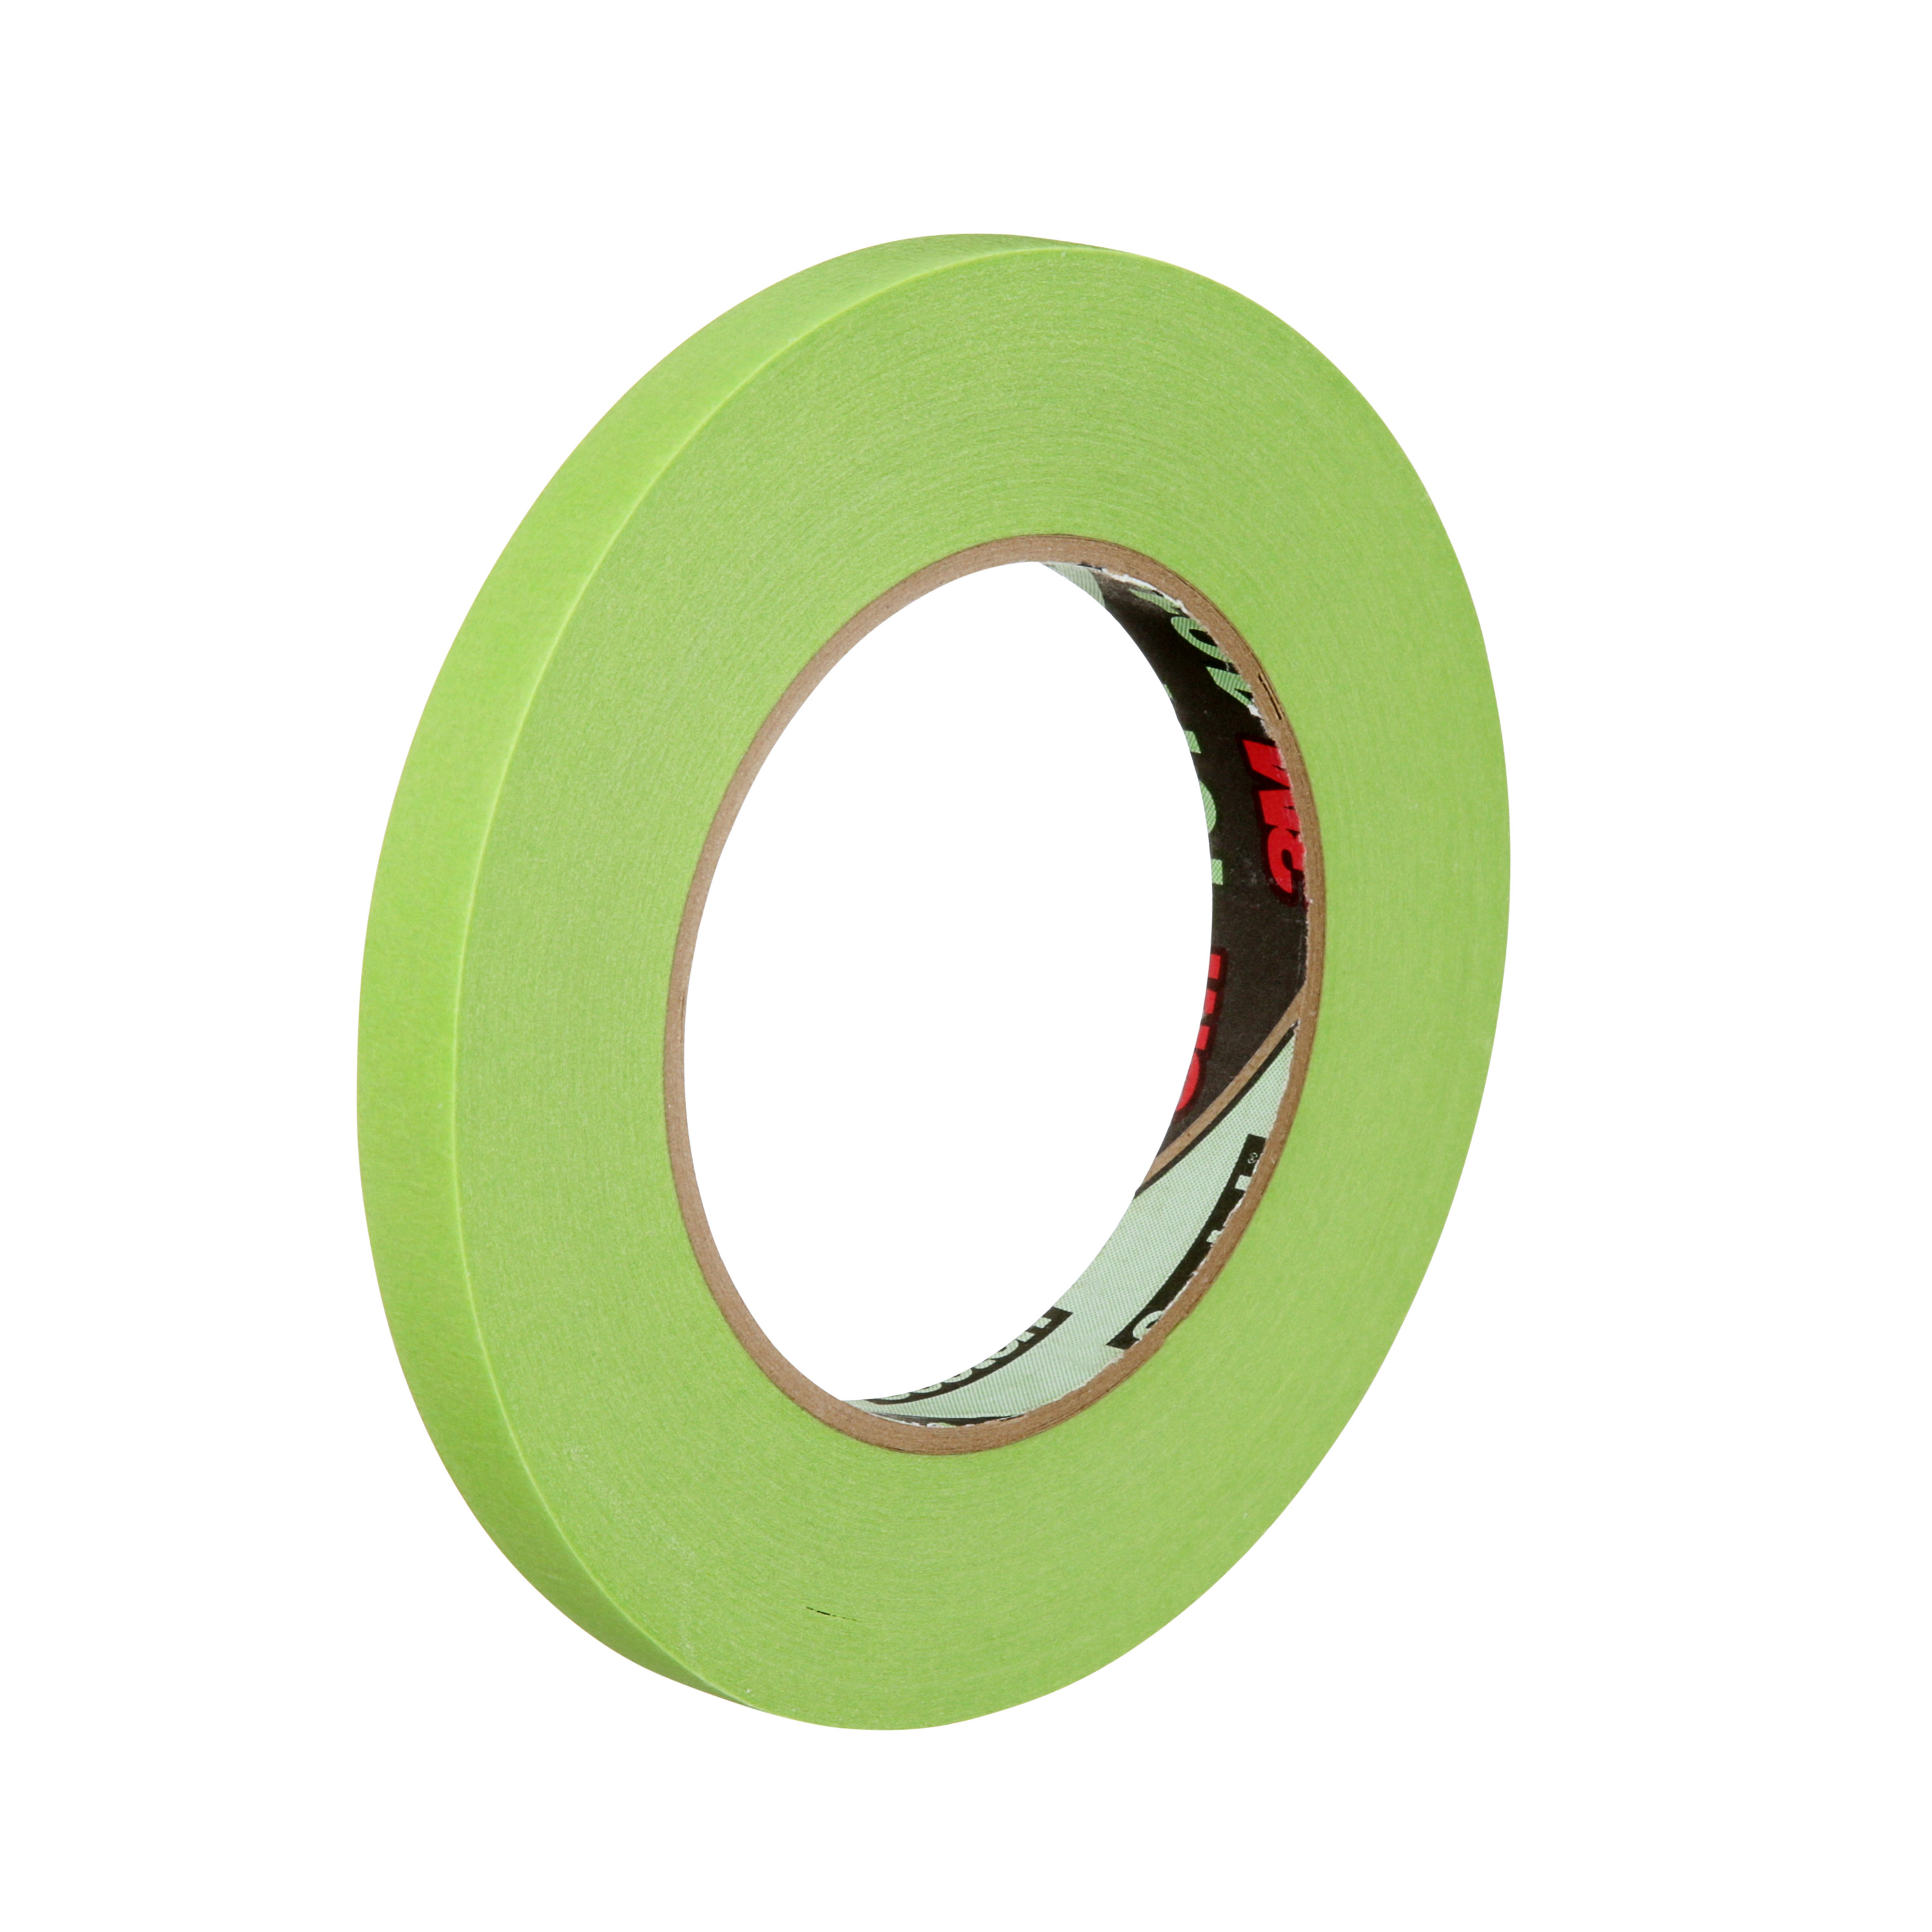 3M™ High Performance Green Masking Tape 401+, 12 mm x 55 m 6.7 mil, 48
per case Bulk